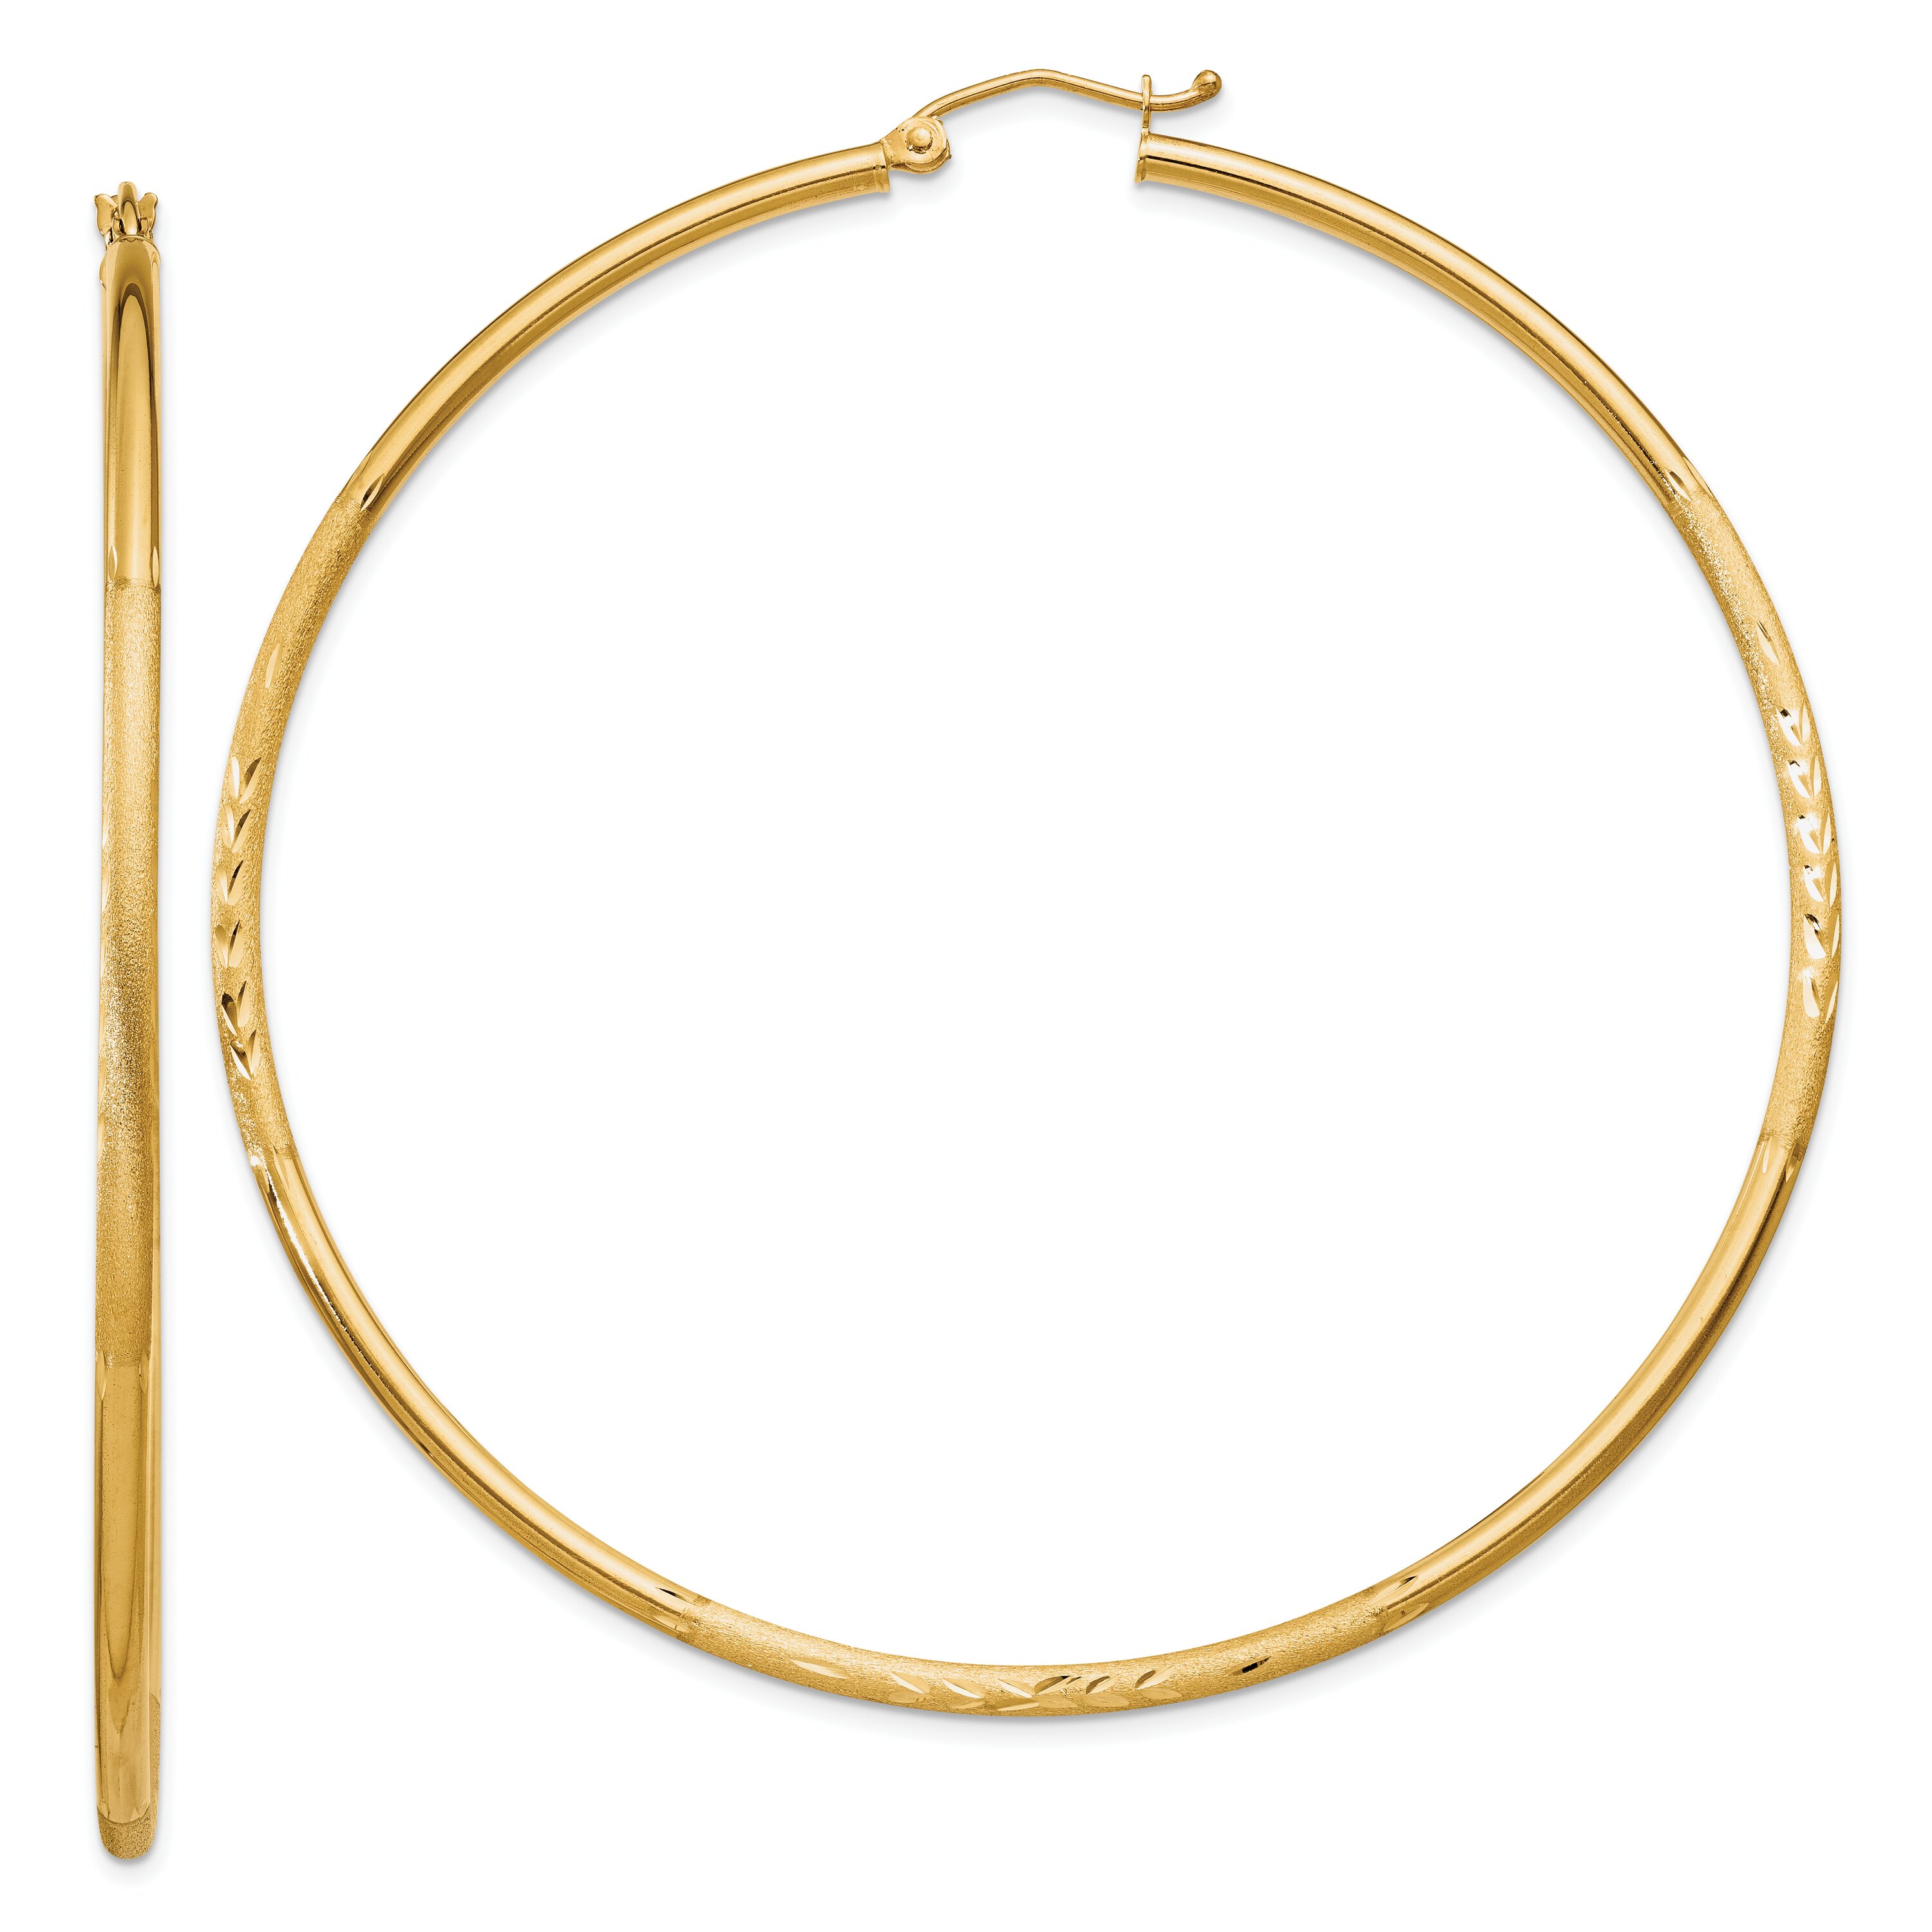 Findingking 14K Gold Tube Hoop Earrings Jewelry TC218